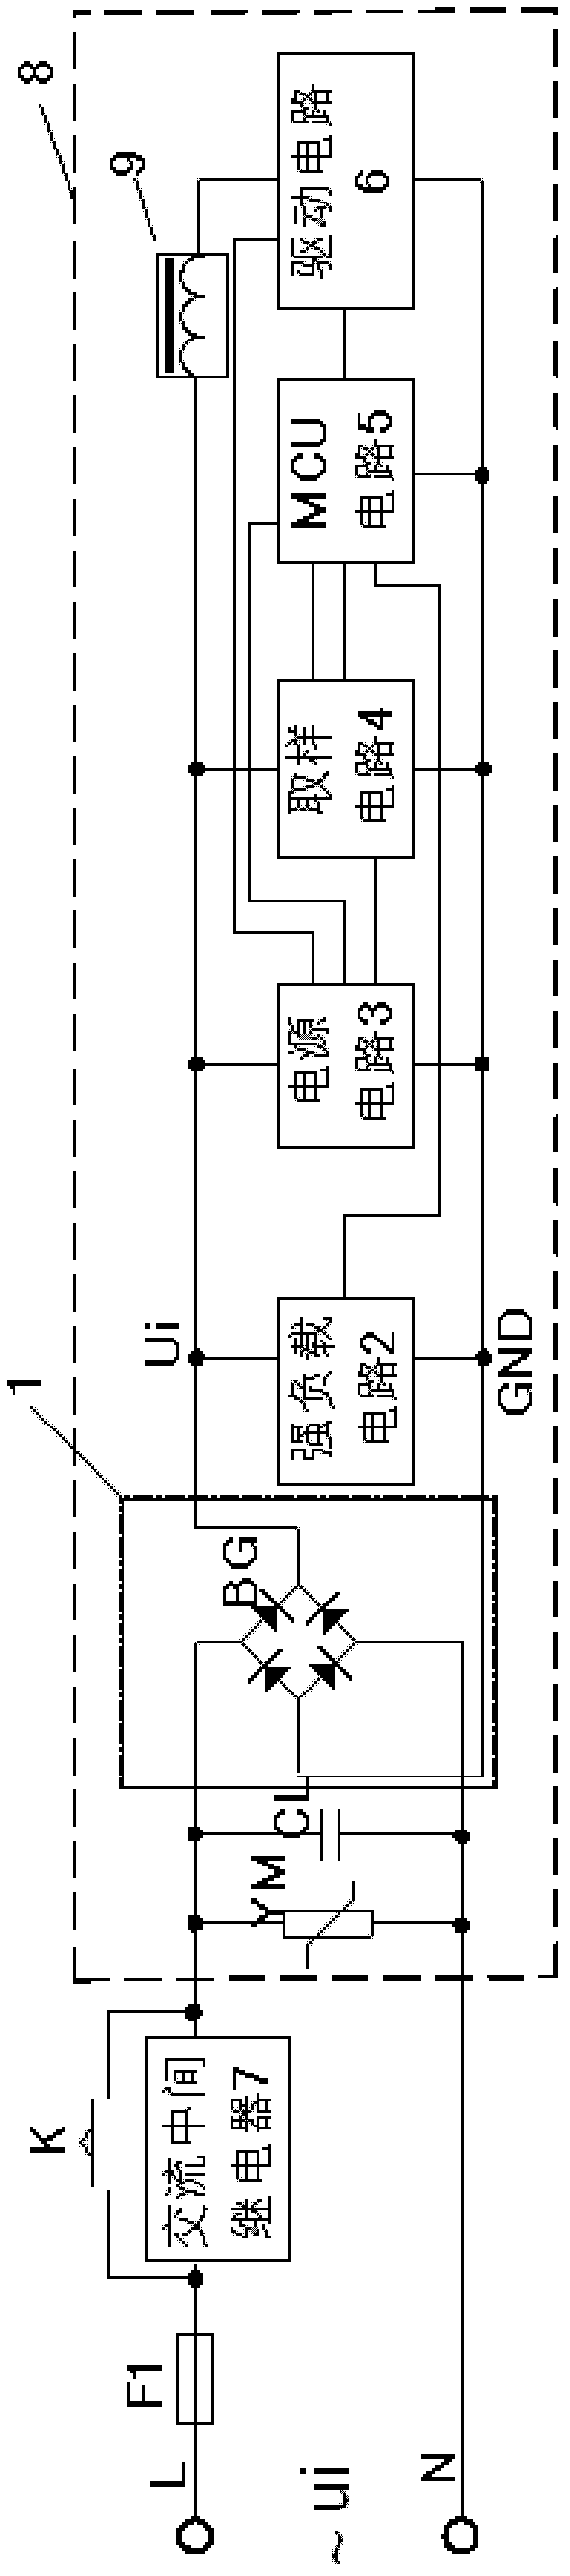 Method for tandem operation of alternating current shunt release and alternating current relay